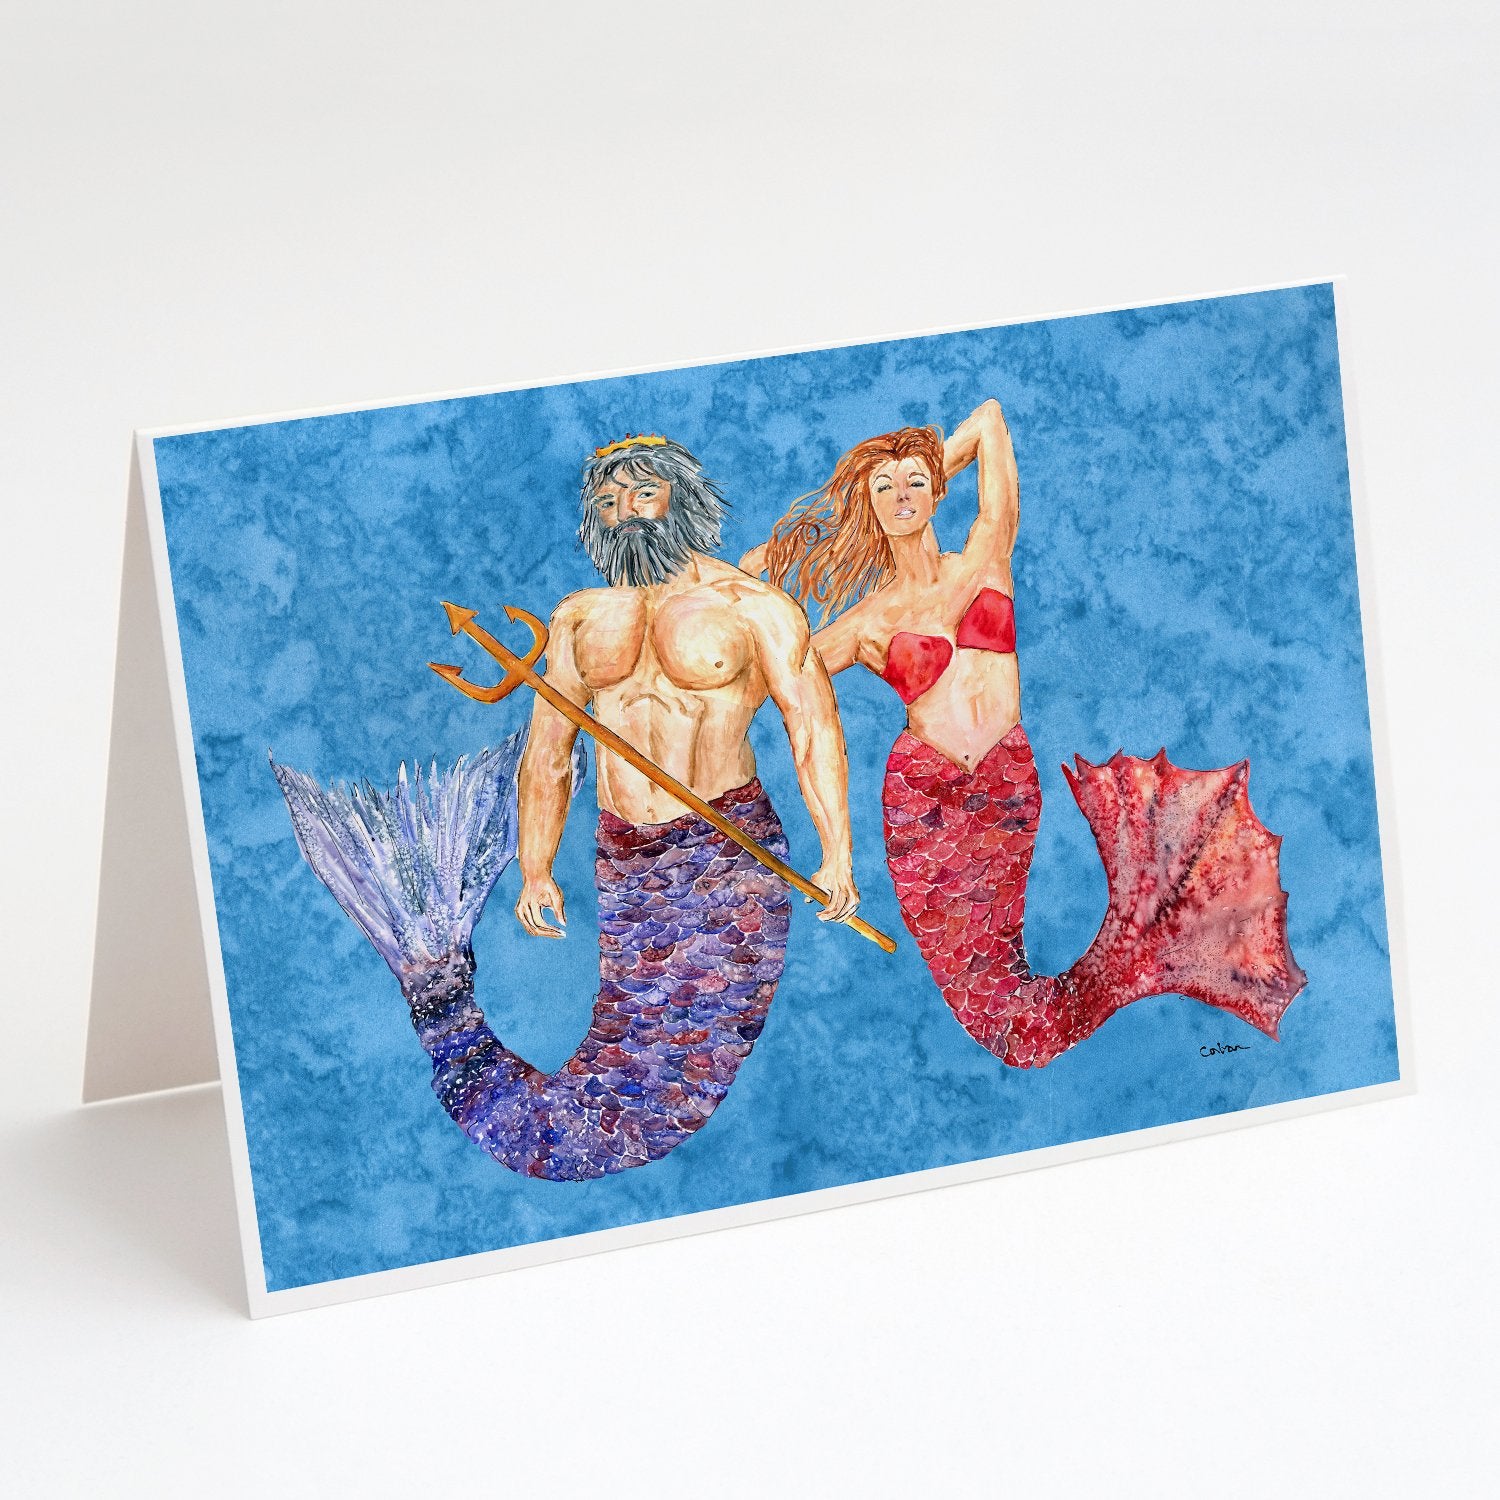 Buy this Mermaid and Merman Greeting Cards and Envelopes Pack of 8